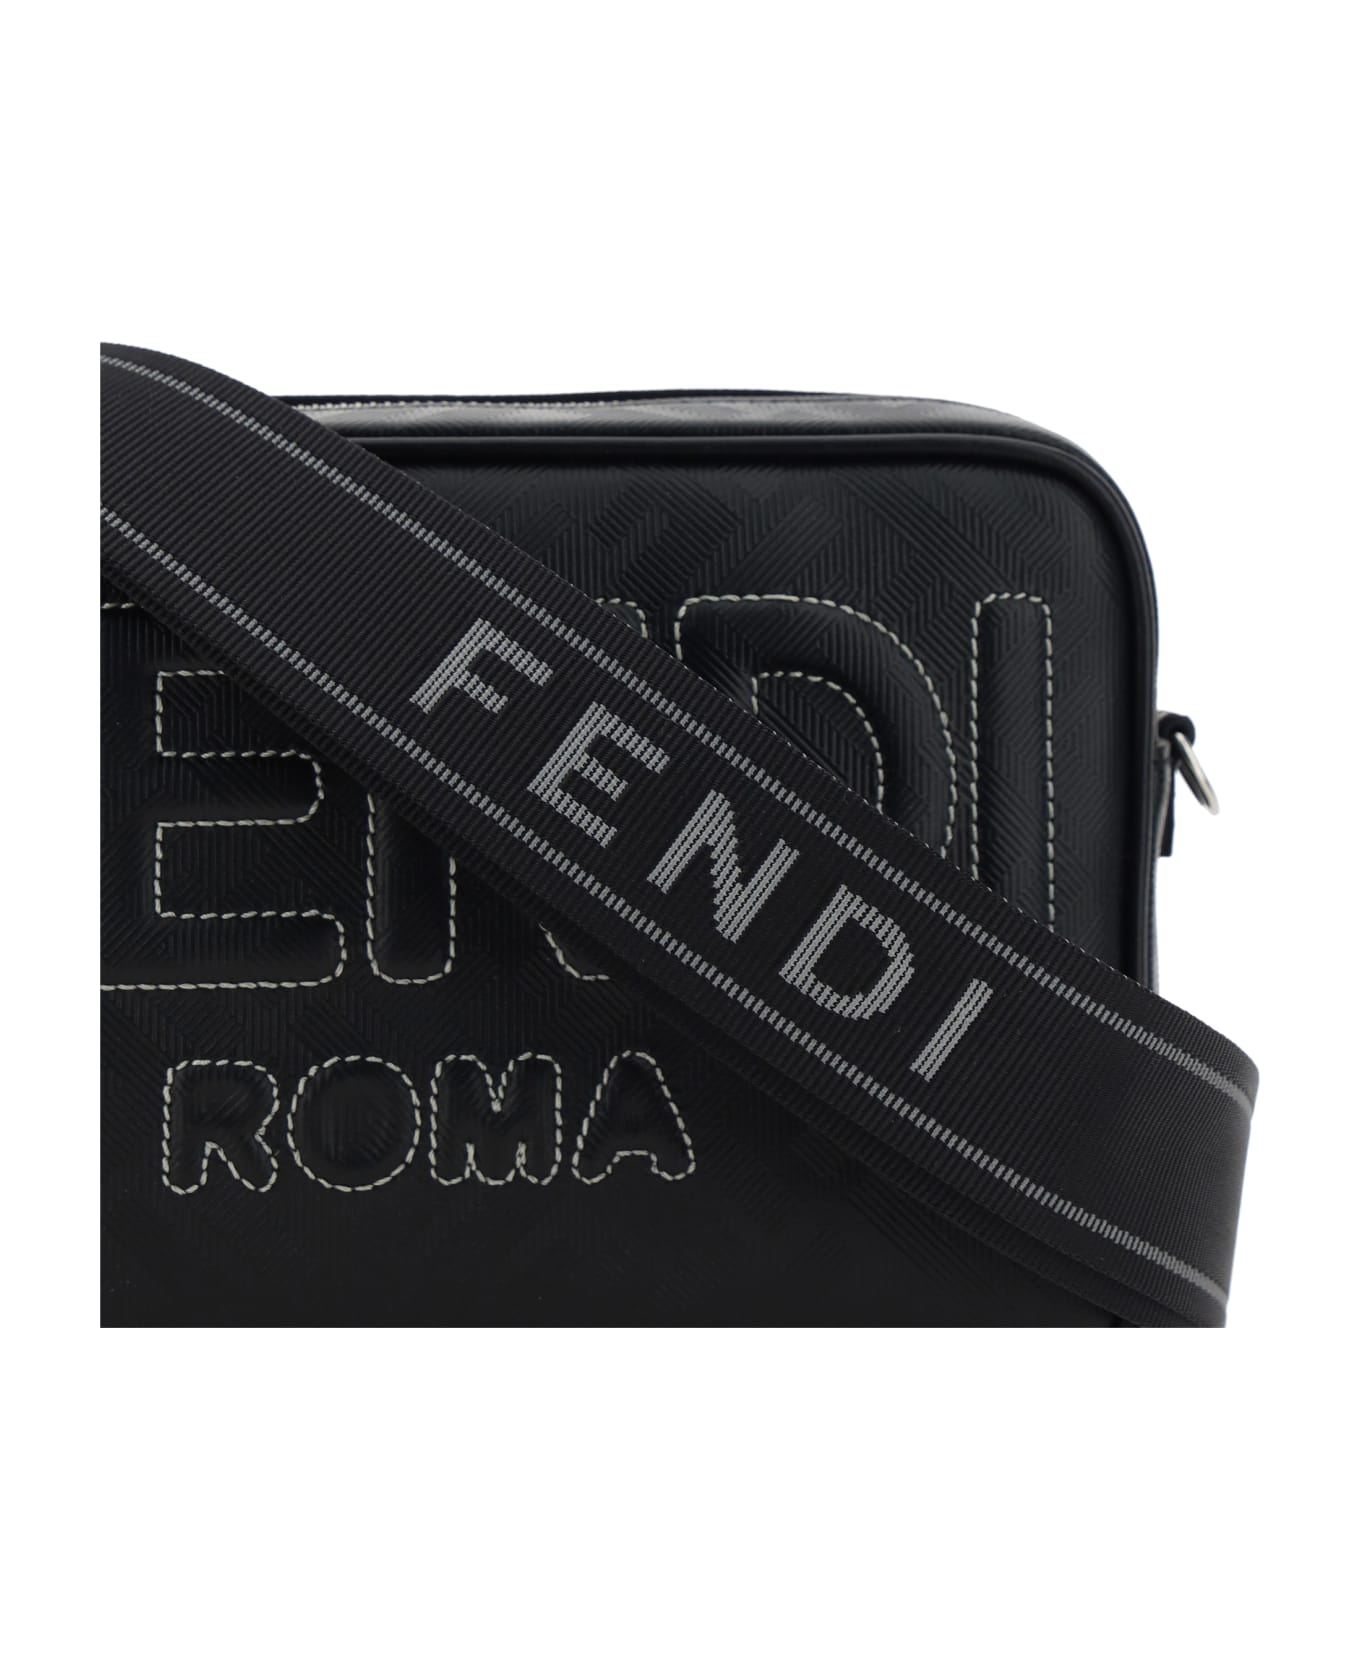 Fendi Camera Fanny Pack - Black